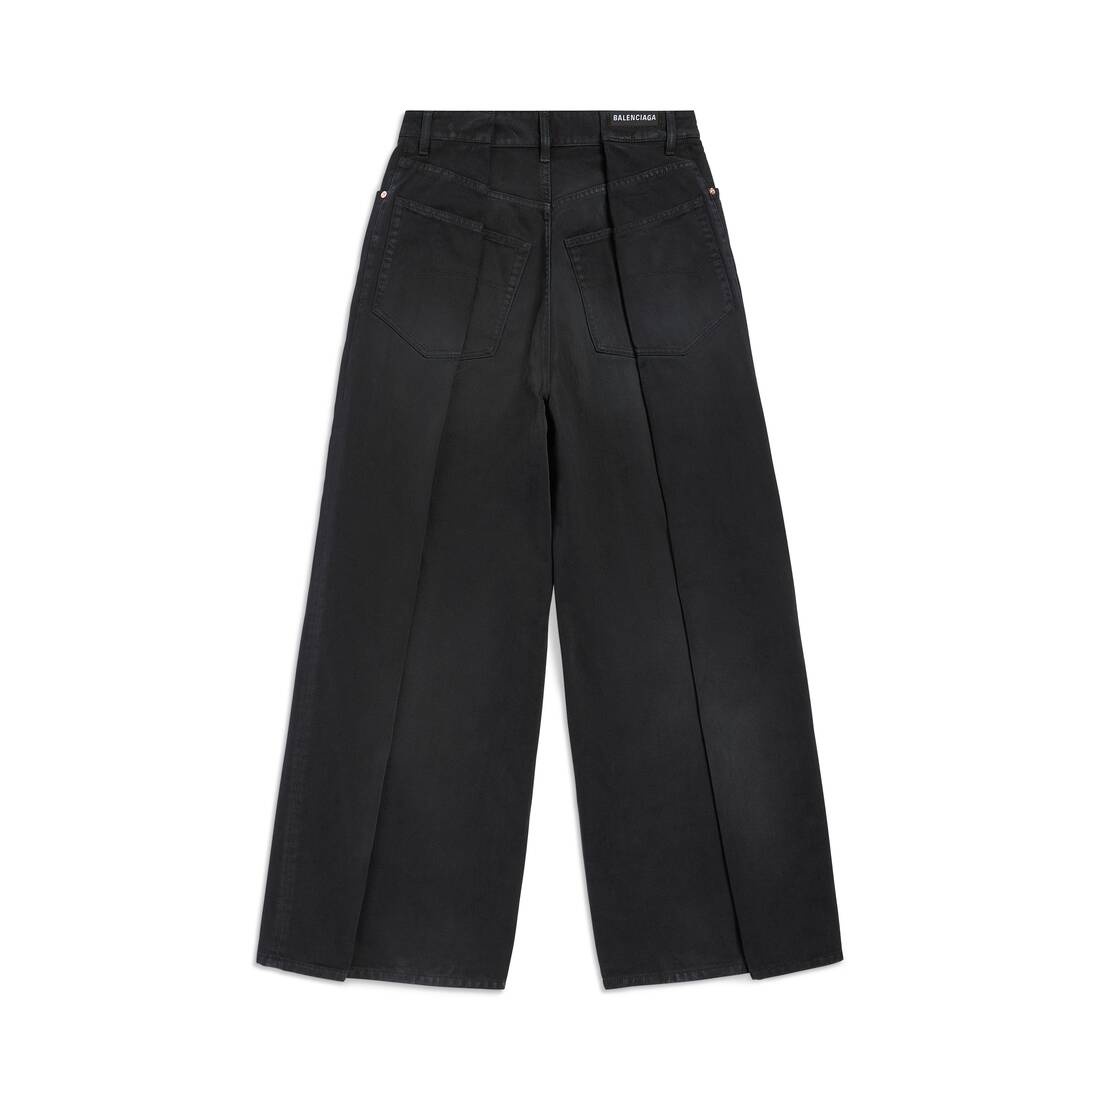 Double Side Pants in Black Faded - 6